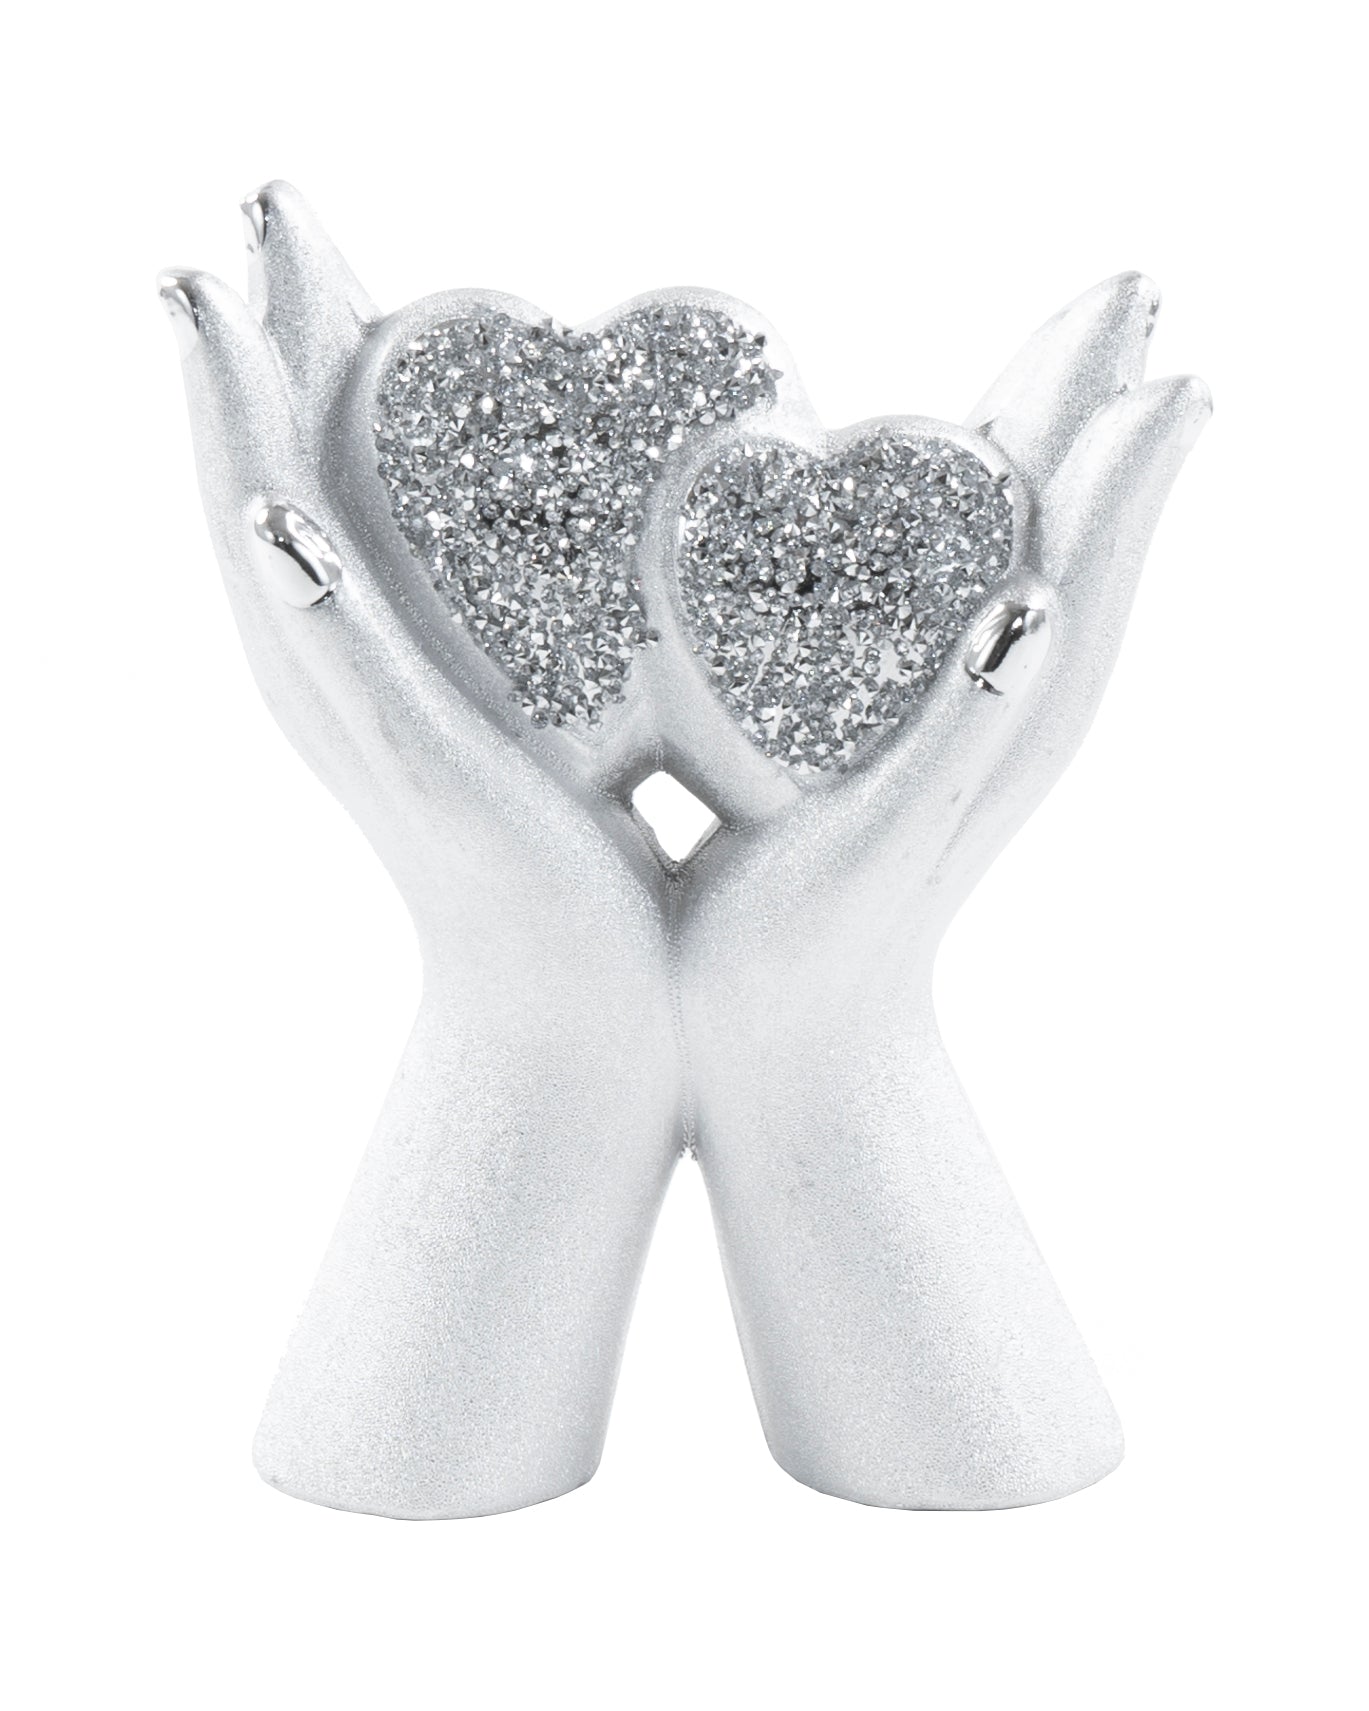 Hands Holding Diamond Hearts Decor - Expo Home Decor